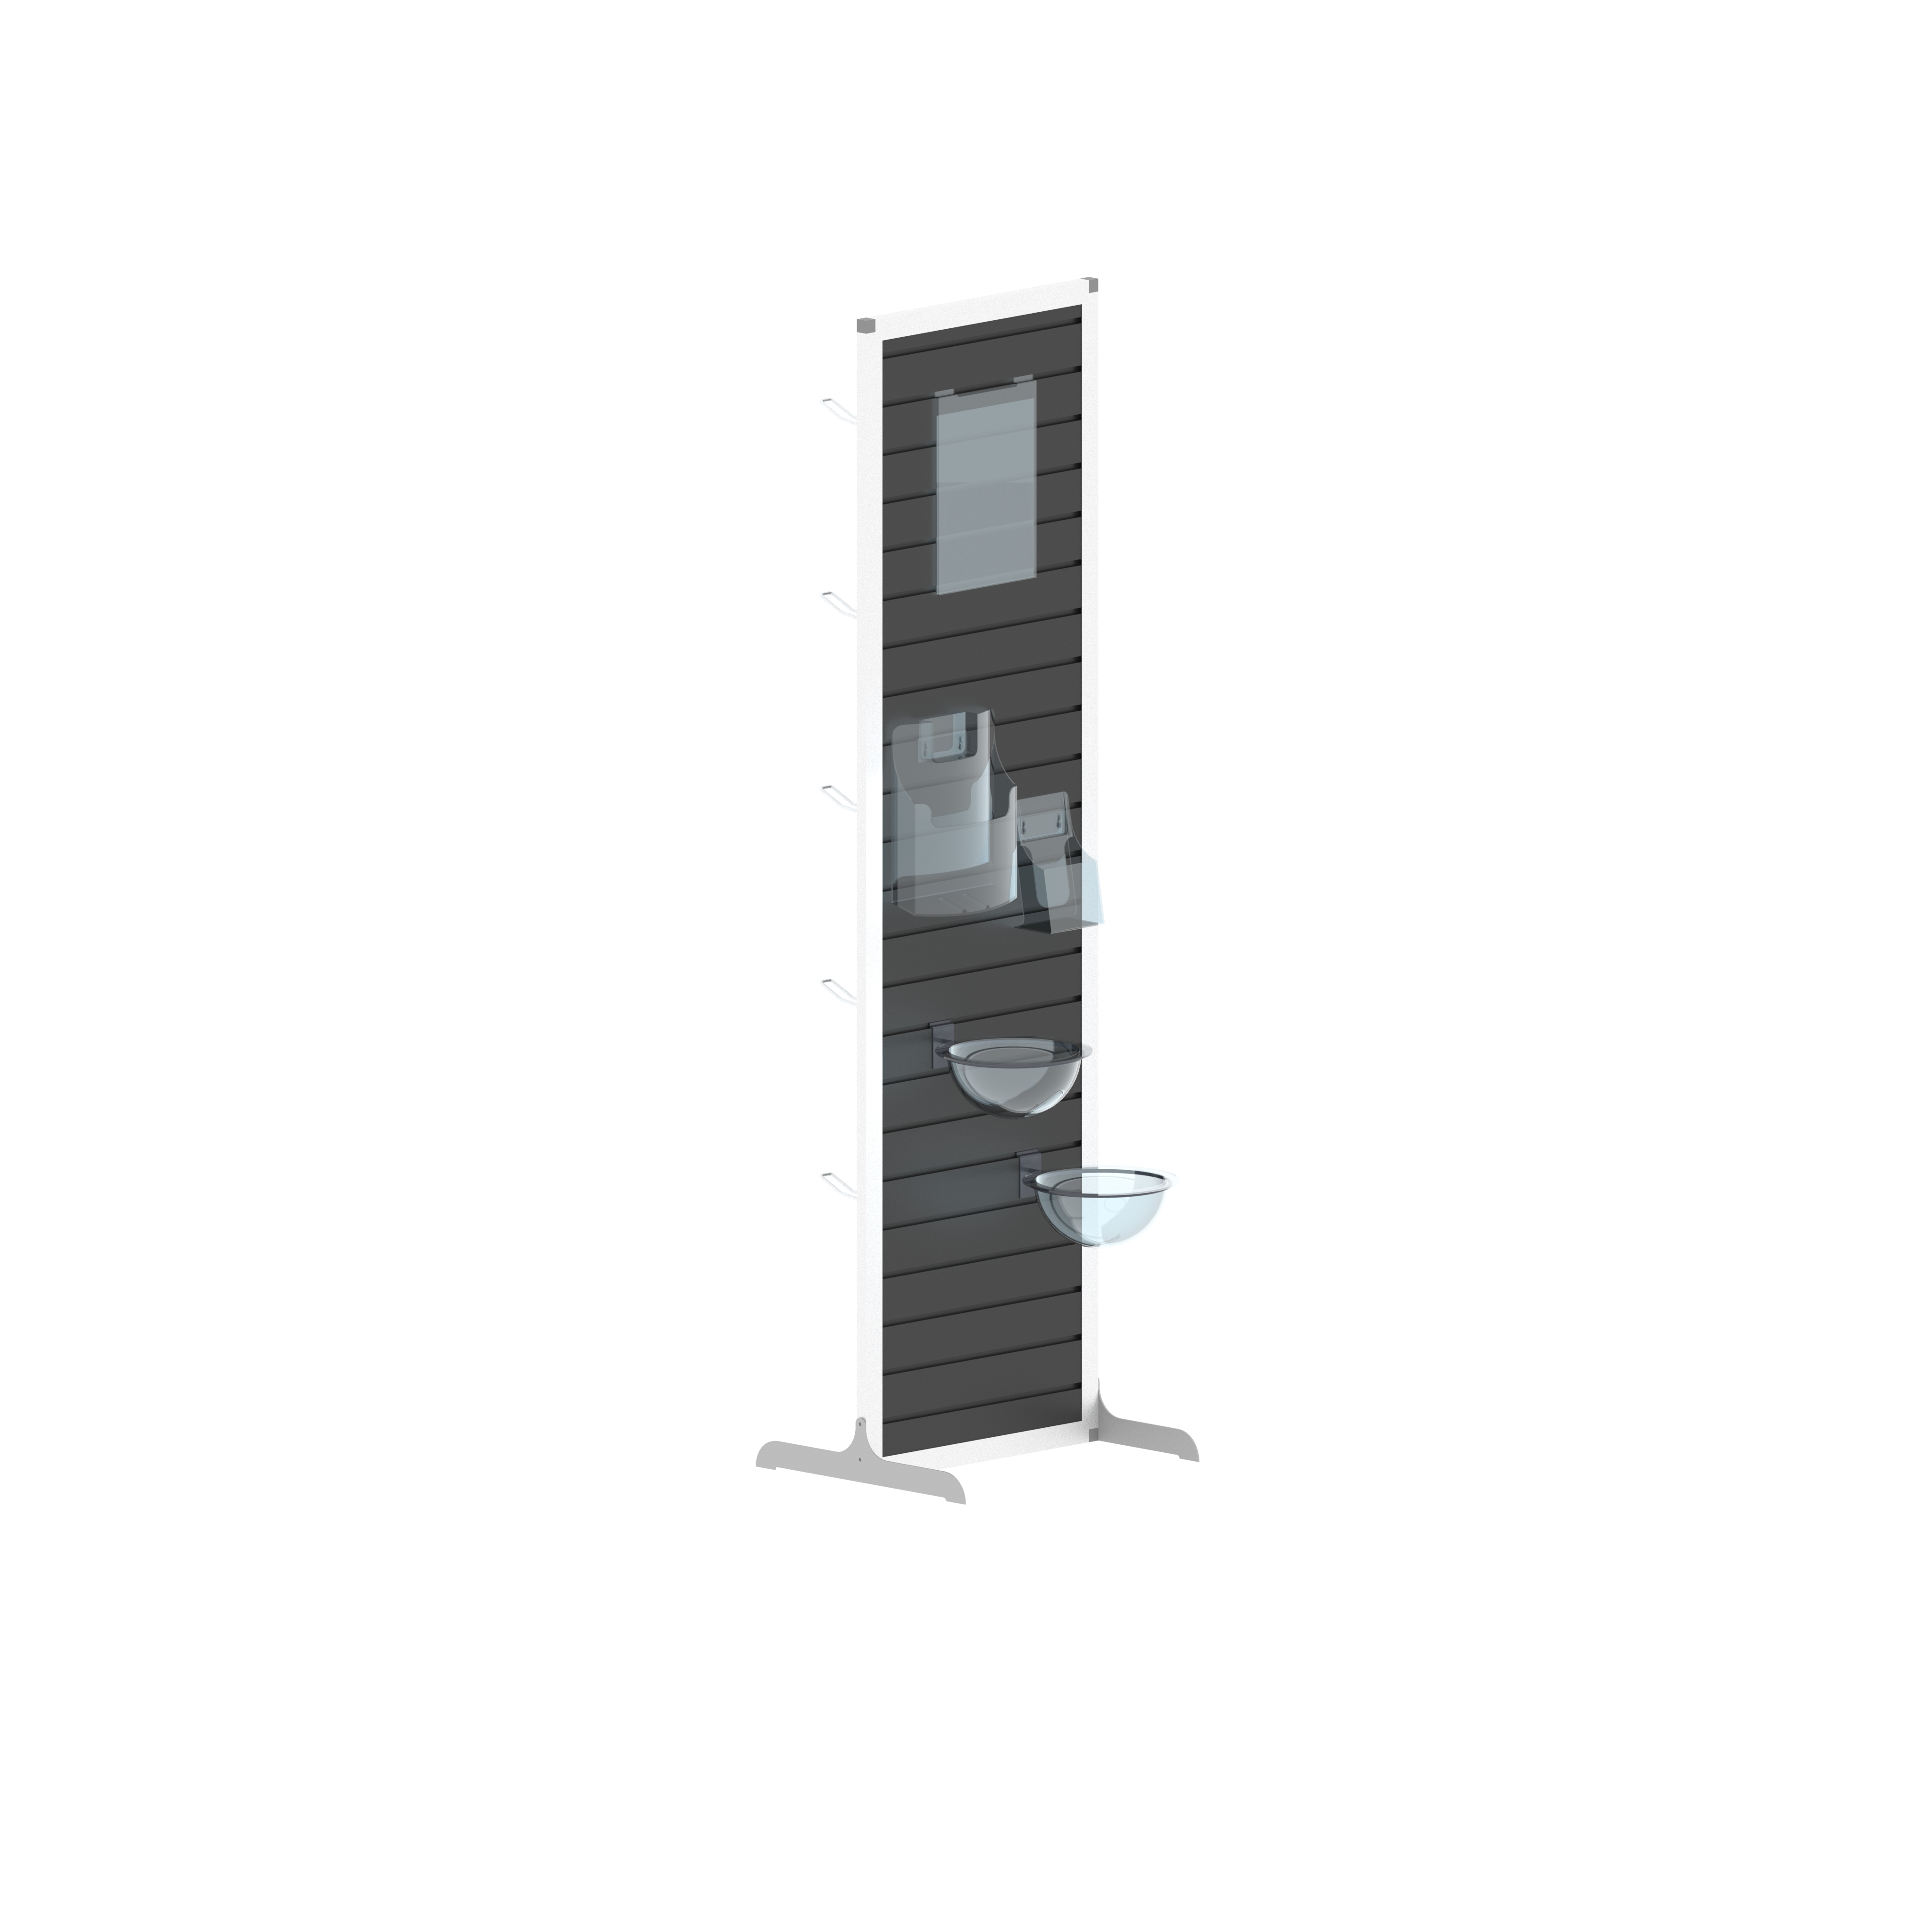 Презентаційна вежа FlexiSlot® з ламелевої стіни  Construct-Slim